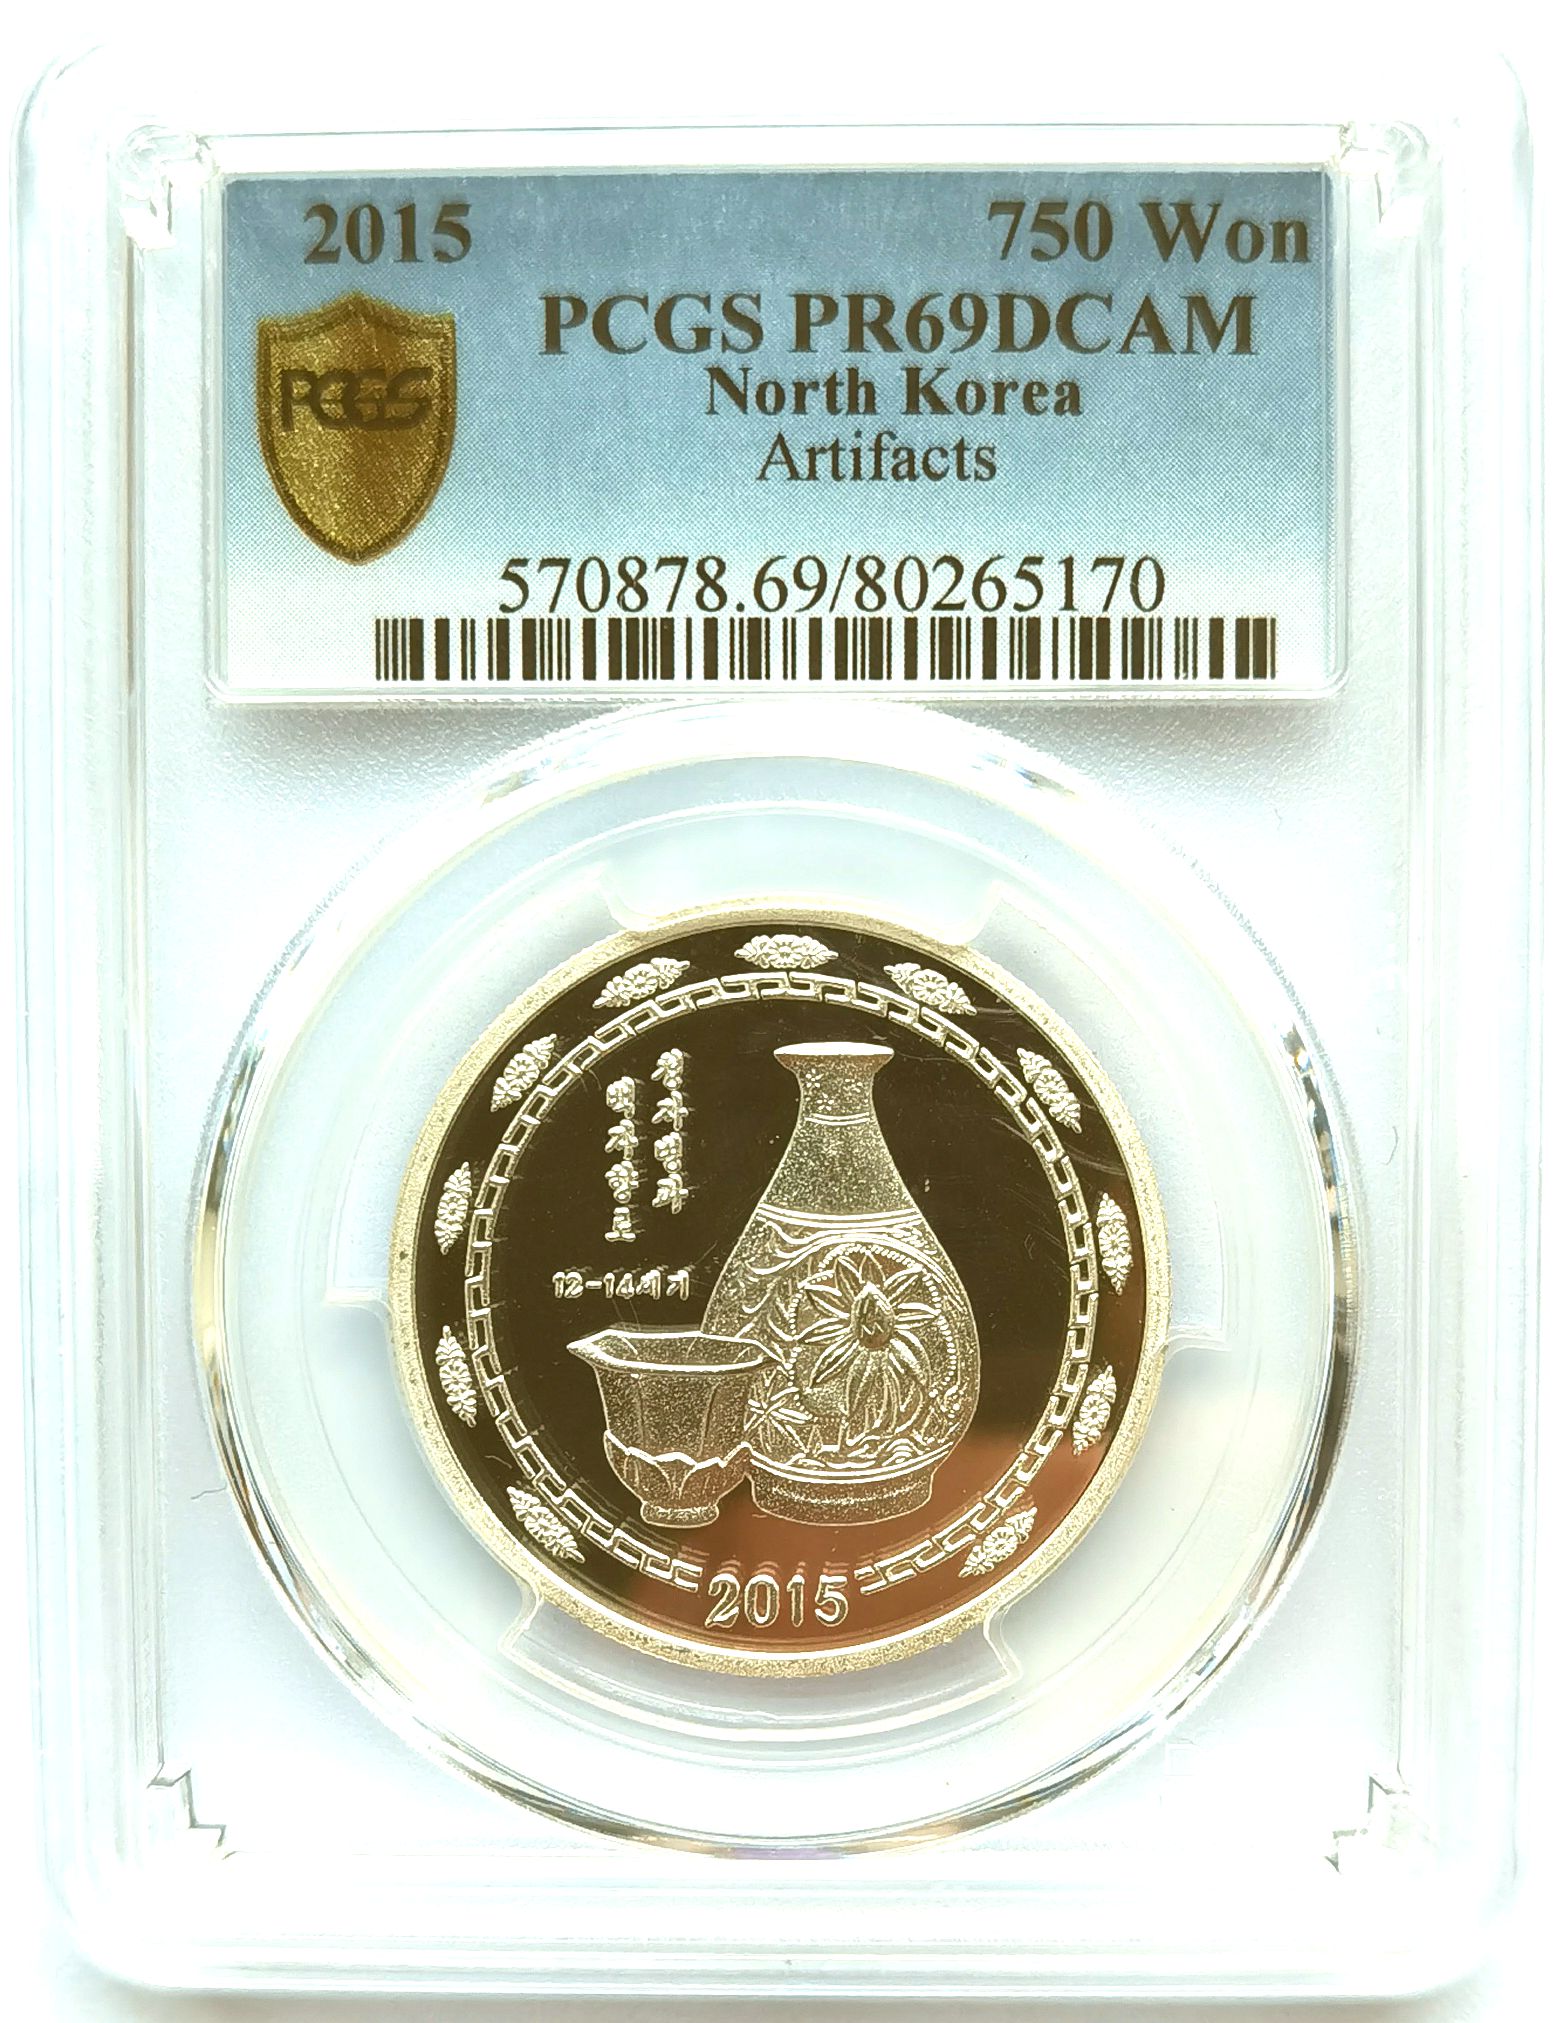 L3468, PCGS PR69, Korea "Koryo Celadon" Proof Silver Coin, 0.5 Ounce, 750 Won, 2015